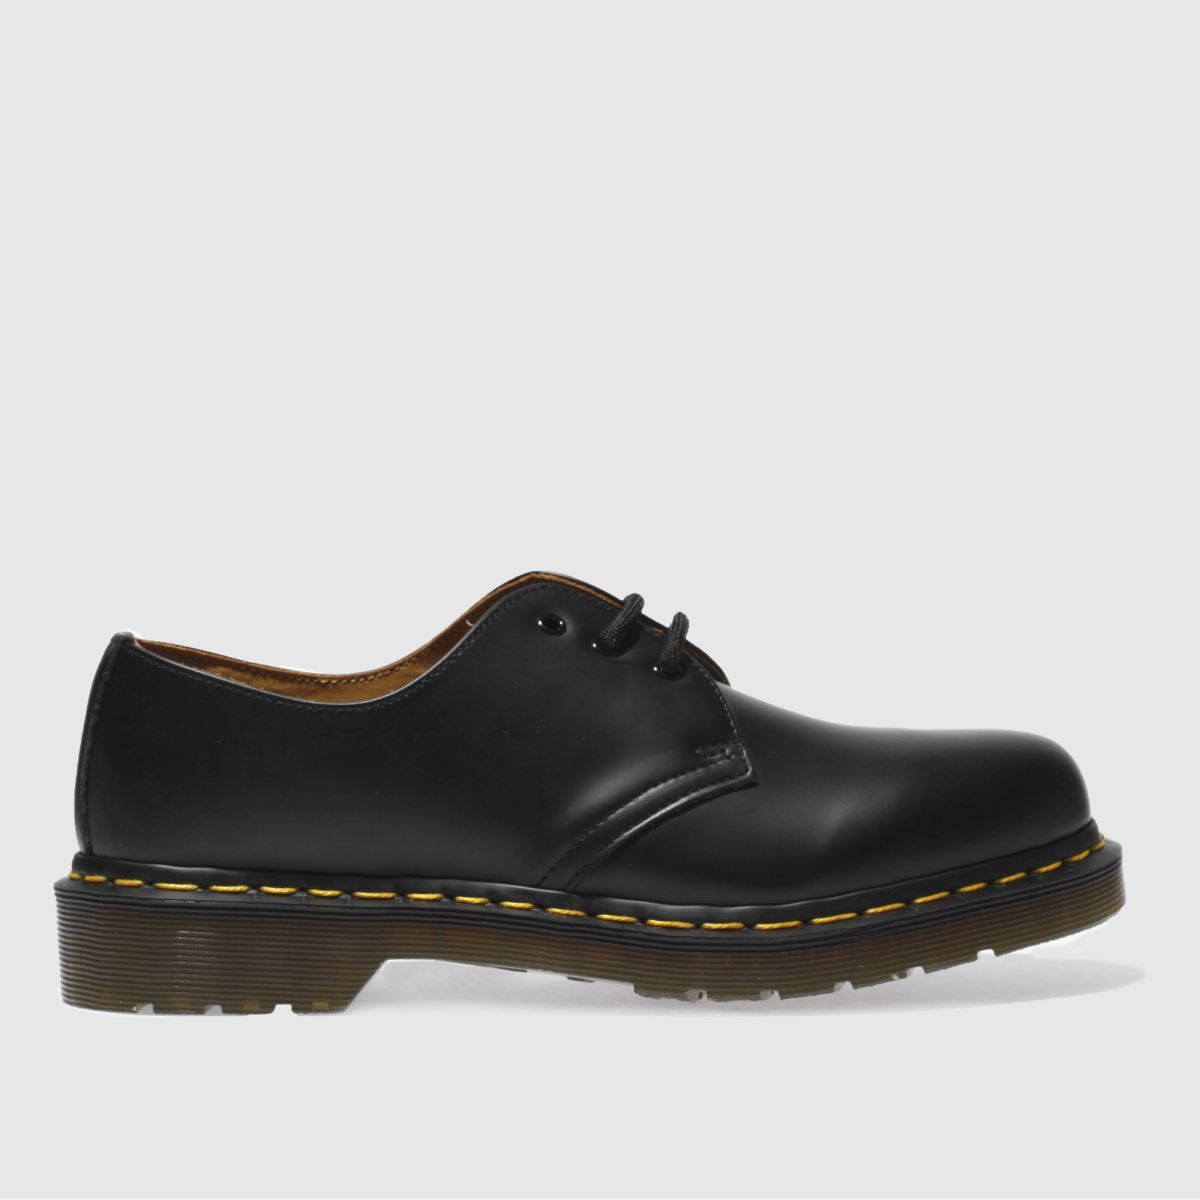 Dr Martens 1461 flat shoes in black | Schuh